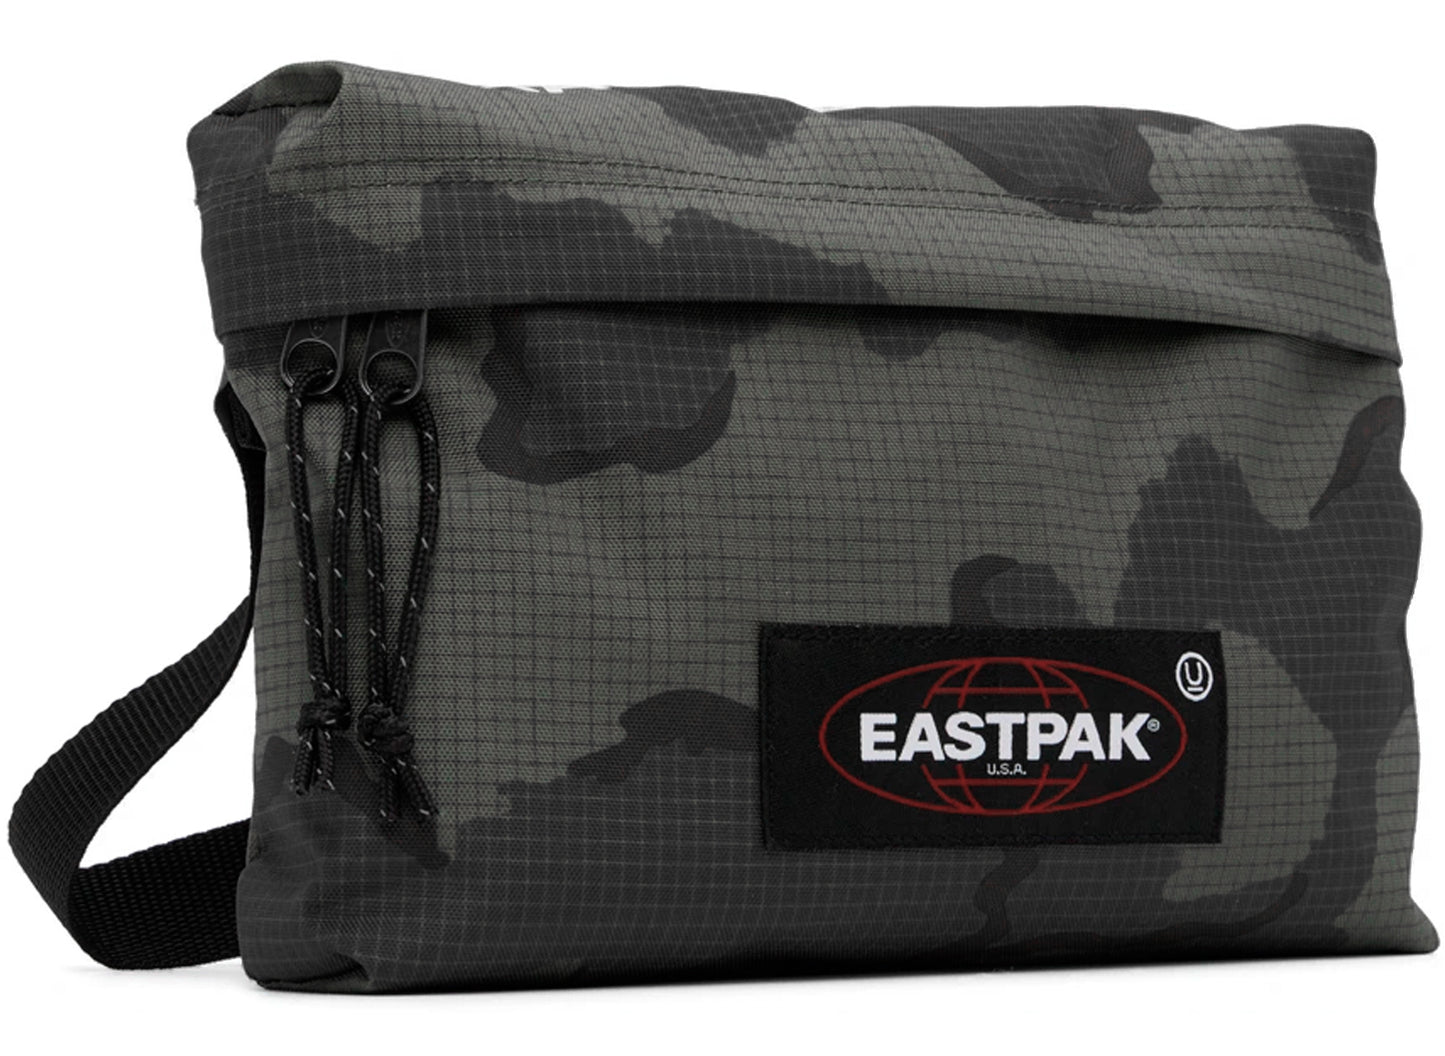 Eastpak x Undercover Crossbody Bag in Black